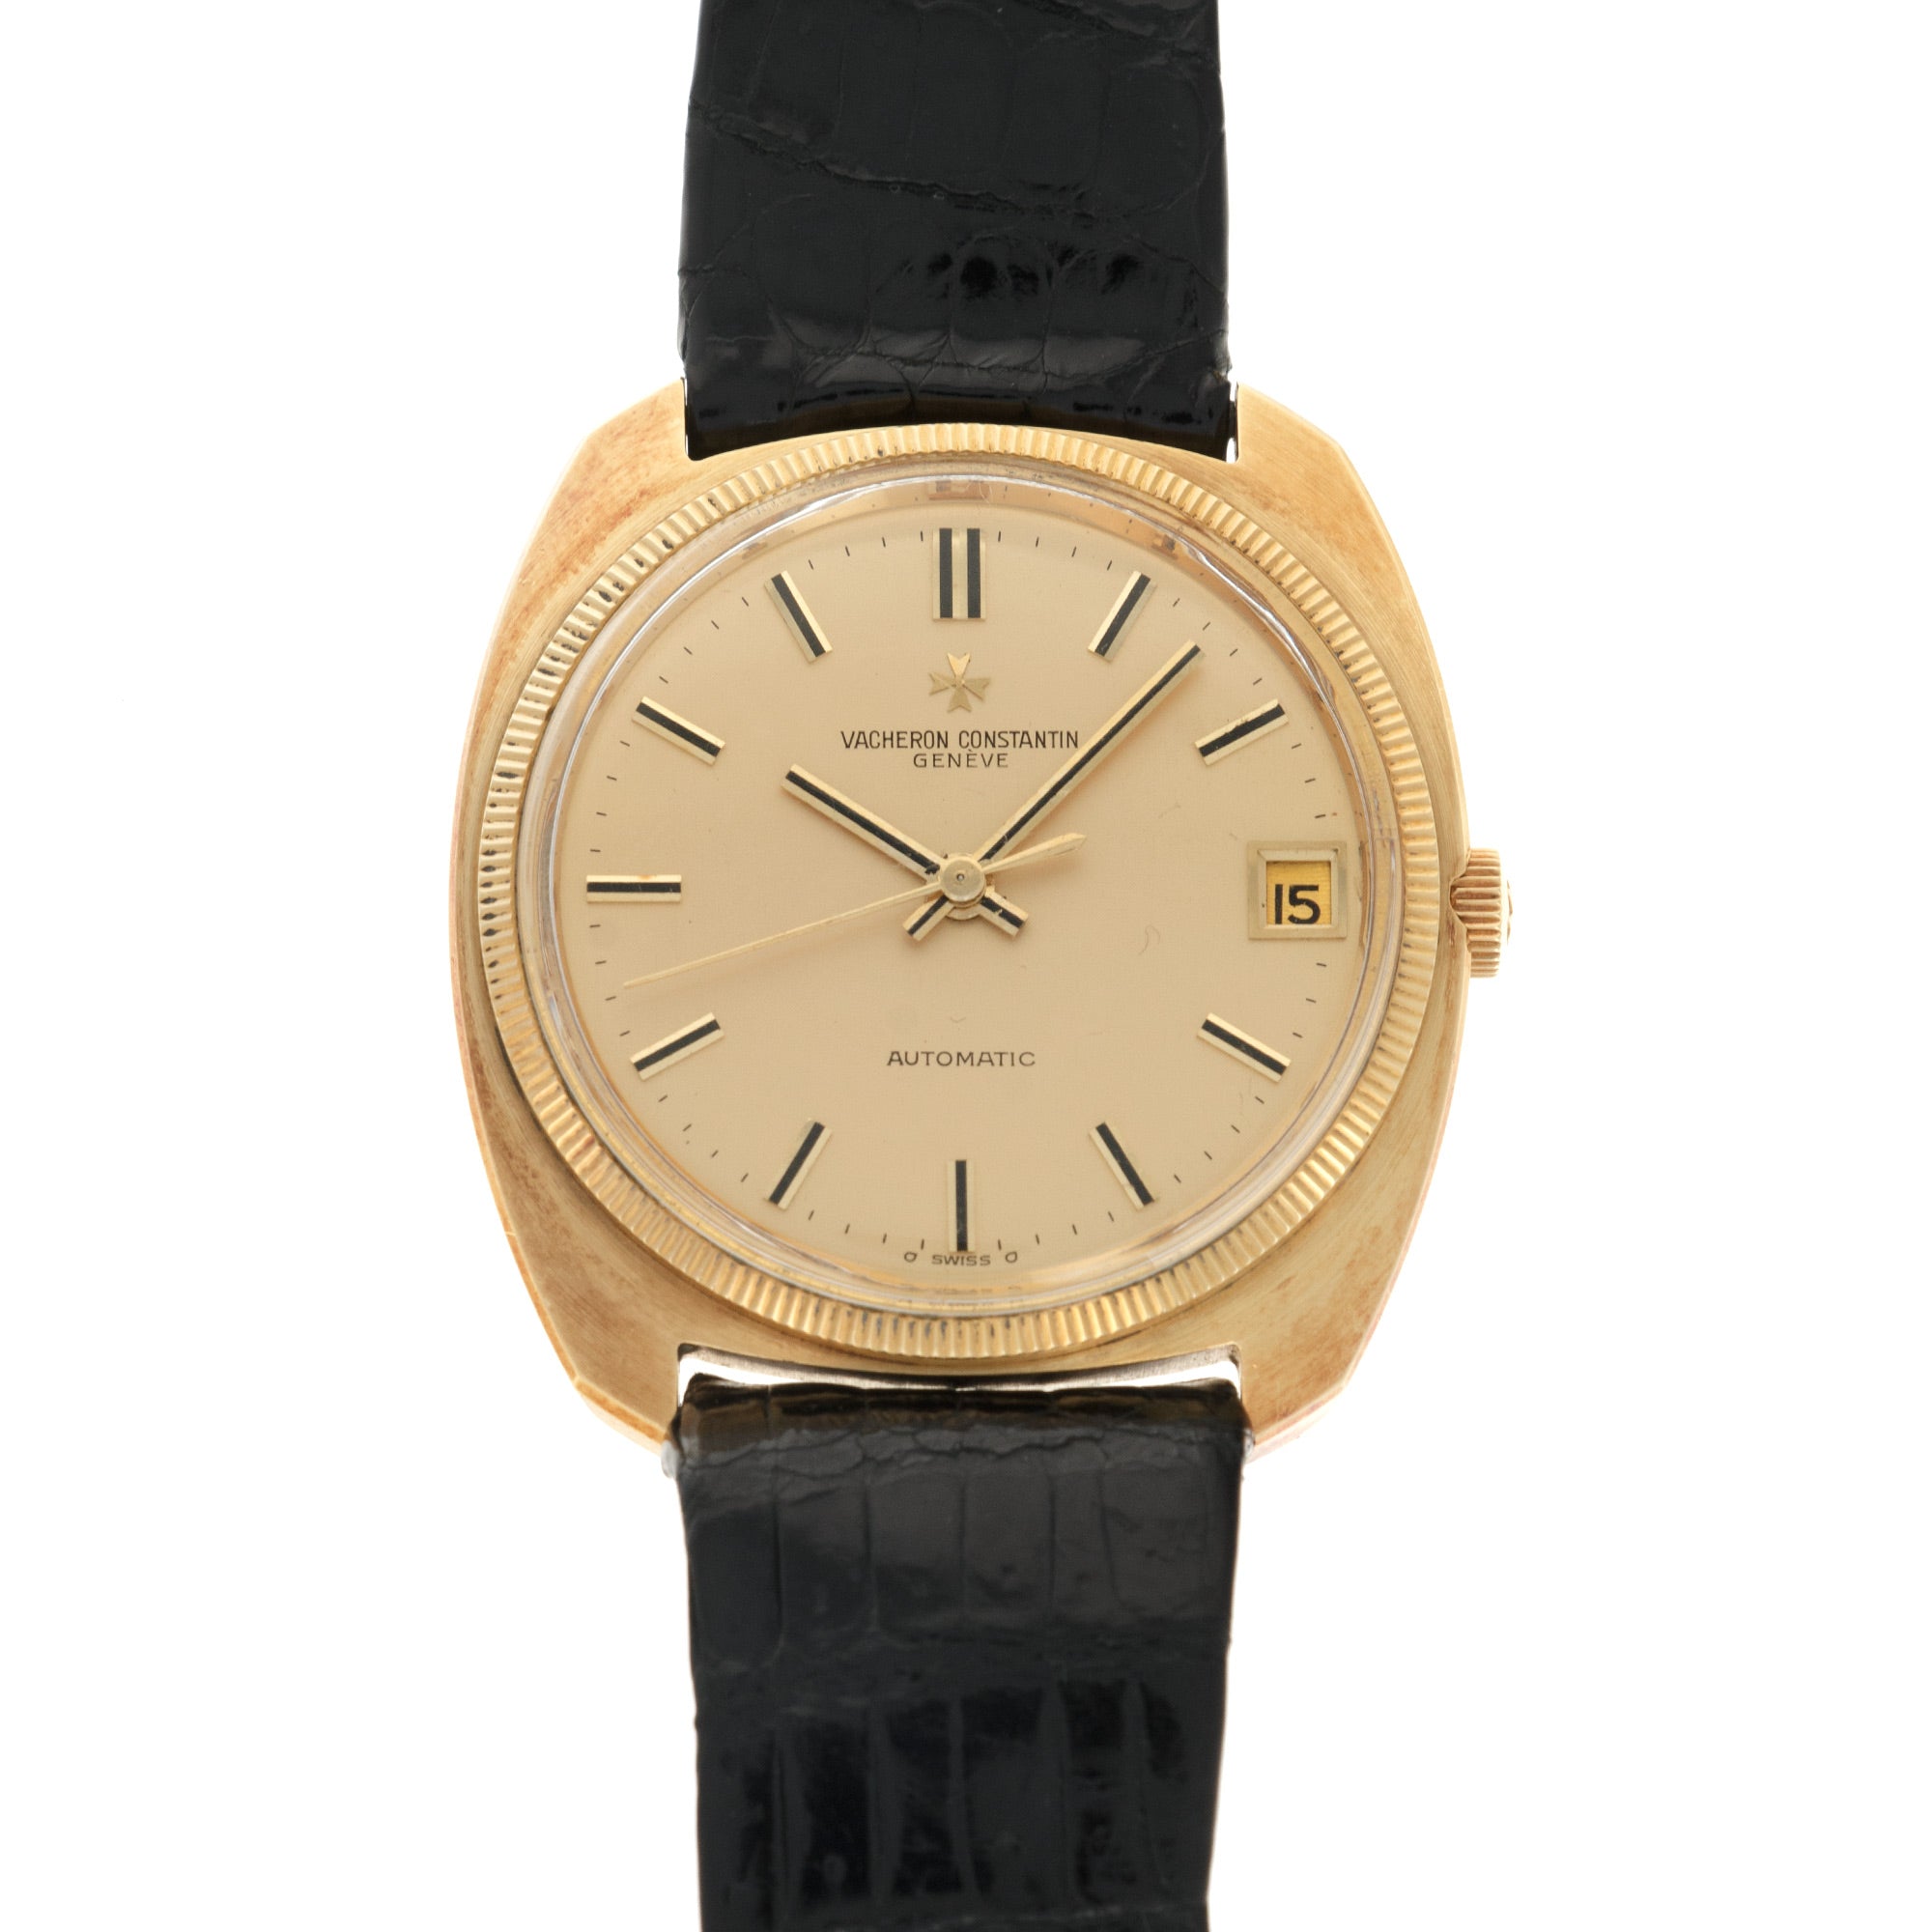 Vacheron Constantin - Vacheron Constantin Yellow Gold Automatic Watch, Ref. 7942 - The Keystone Watches